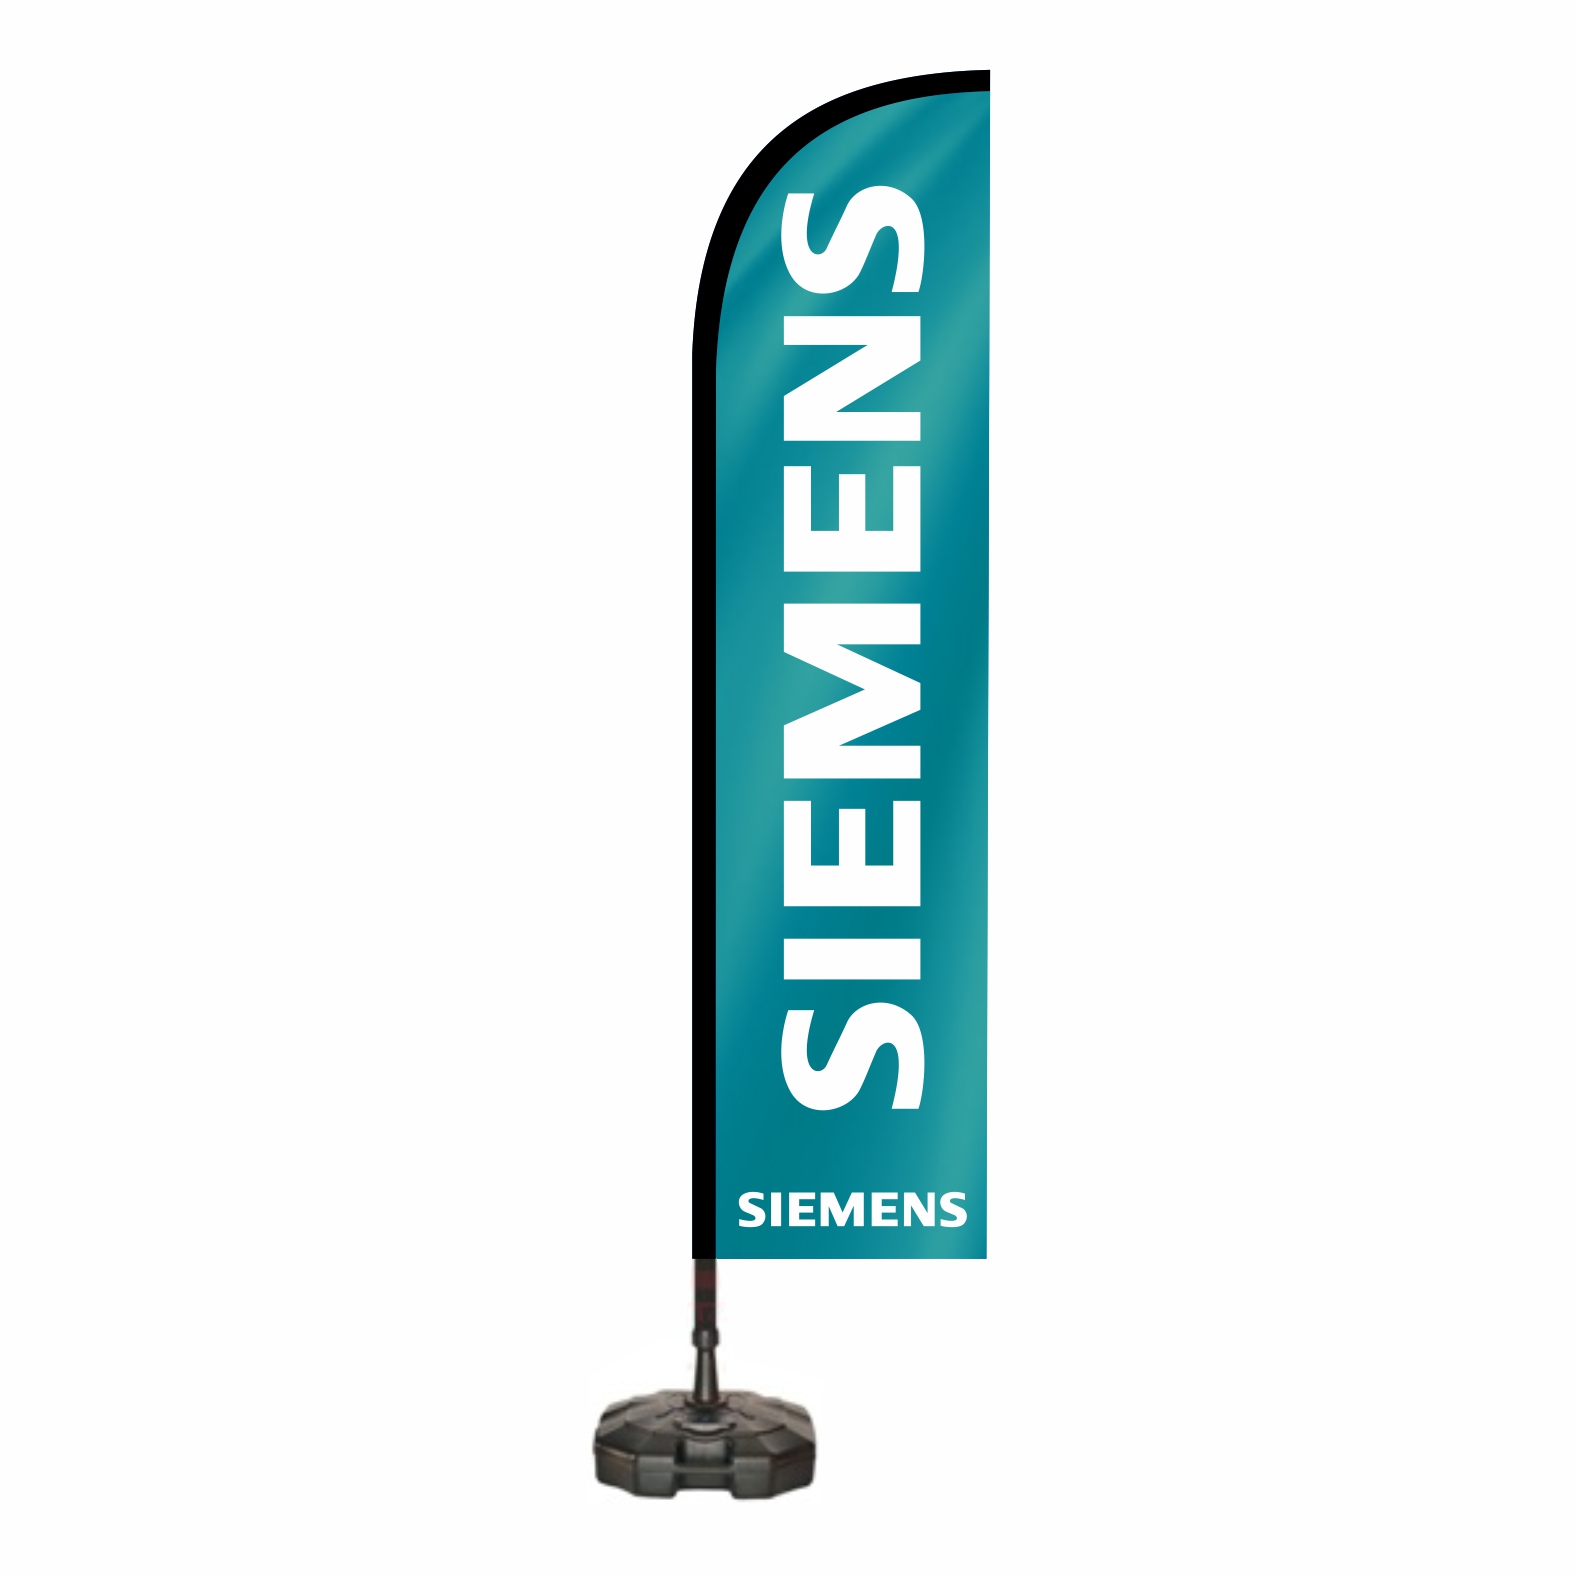 Siemens Plaj Bayra